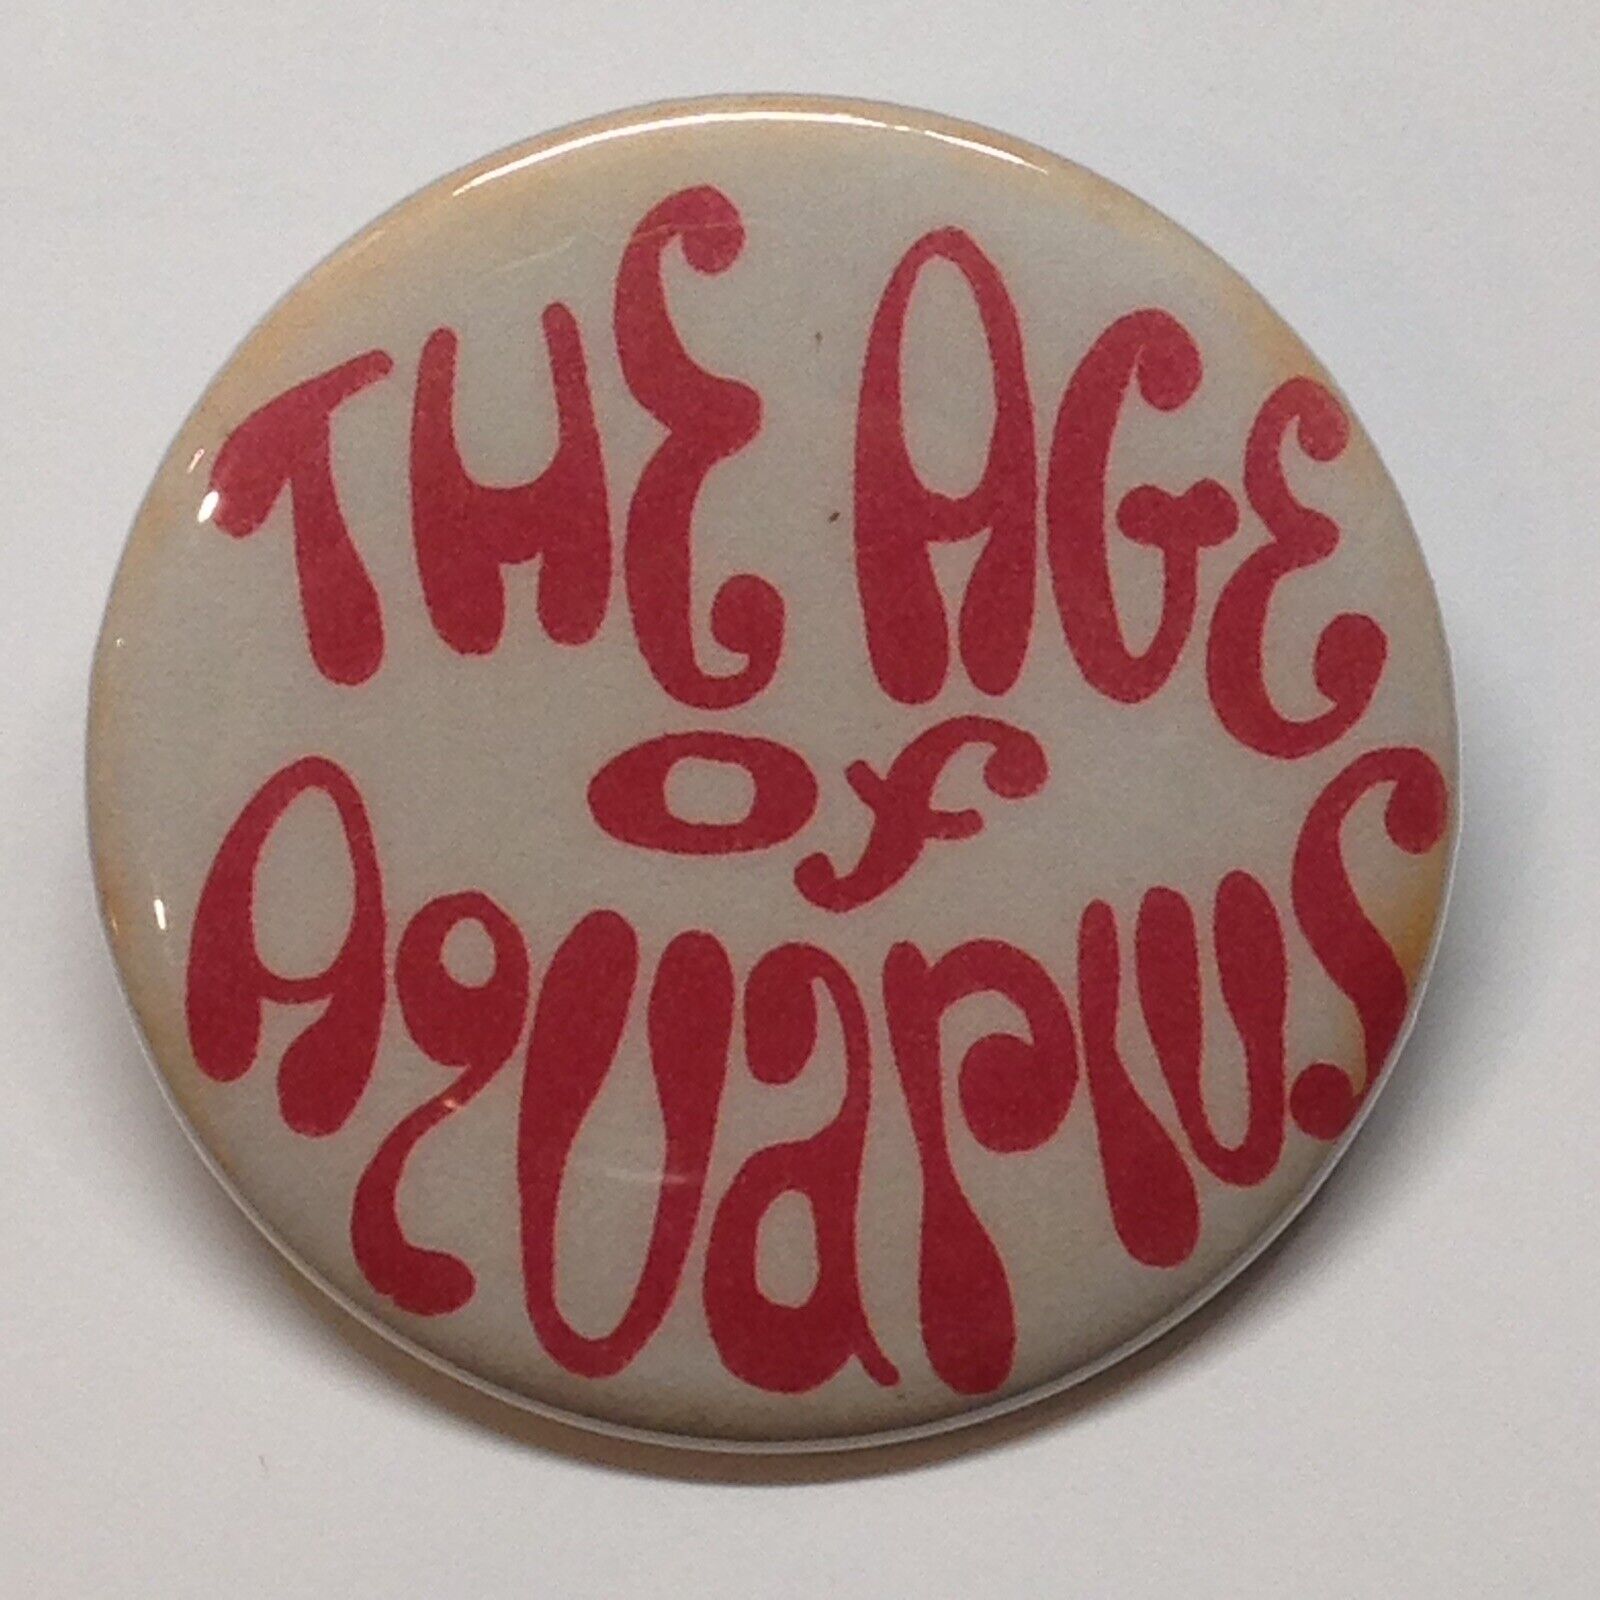 Age Of Aquarius 1960s Style Fridge Magnet BUY 3, GET 4 FREE MIX & MATCH